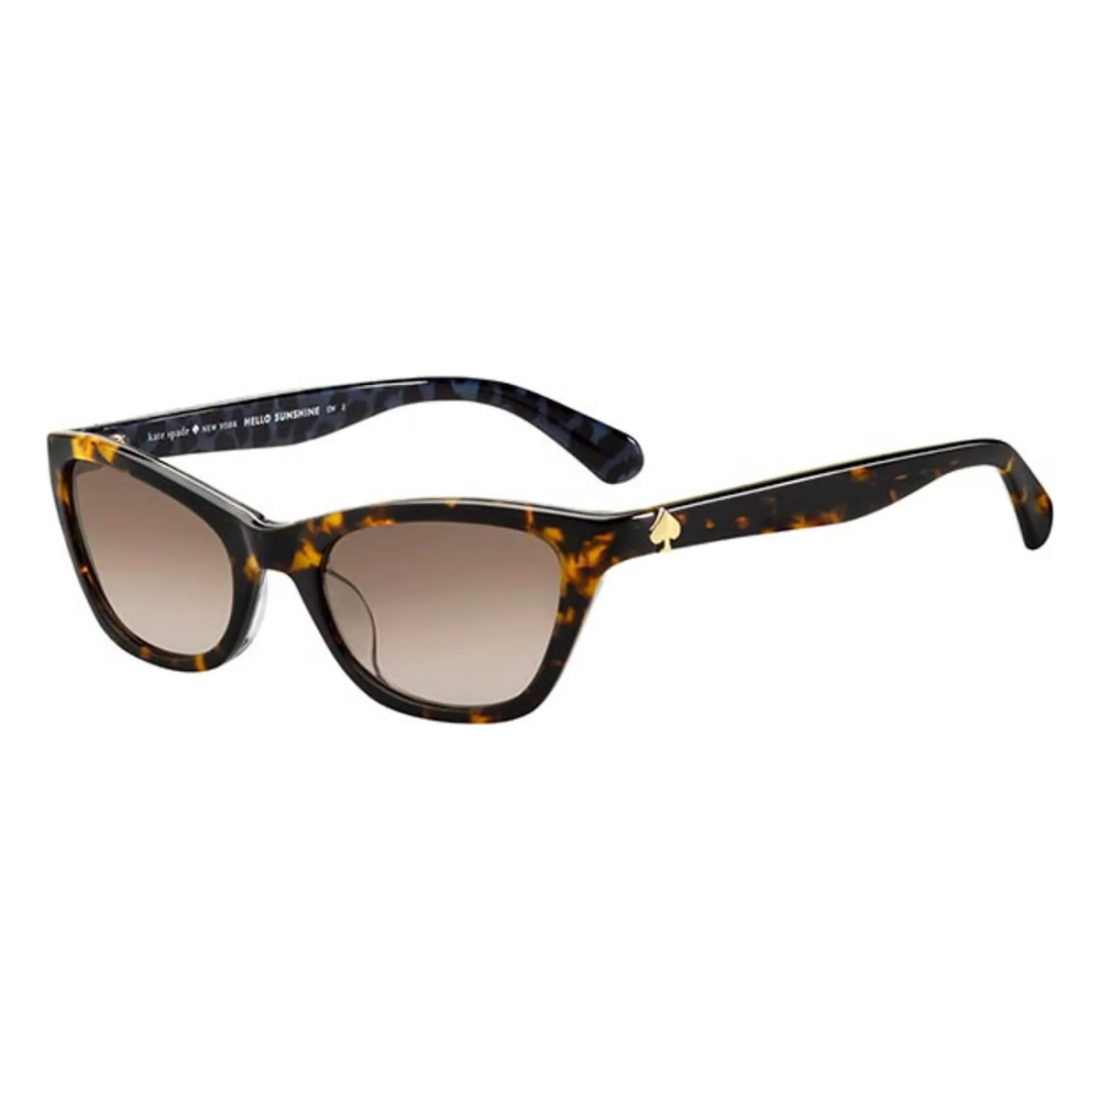 Women's 'JOHNETA/S 0086' Sunglasses